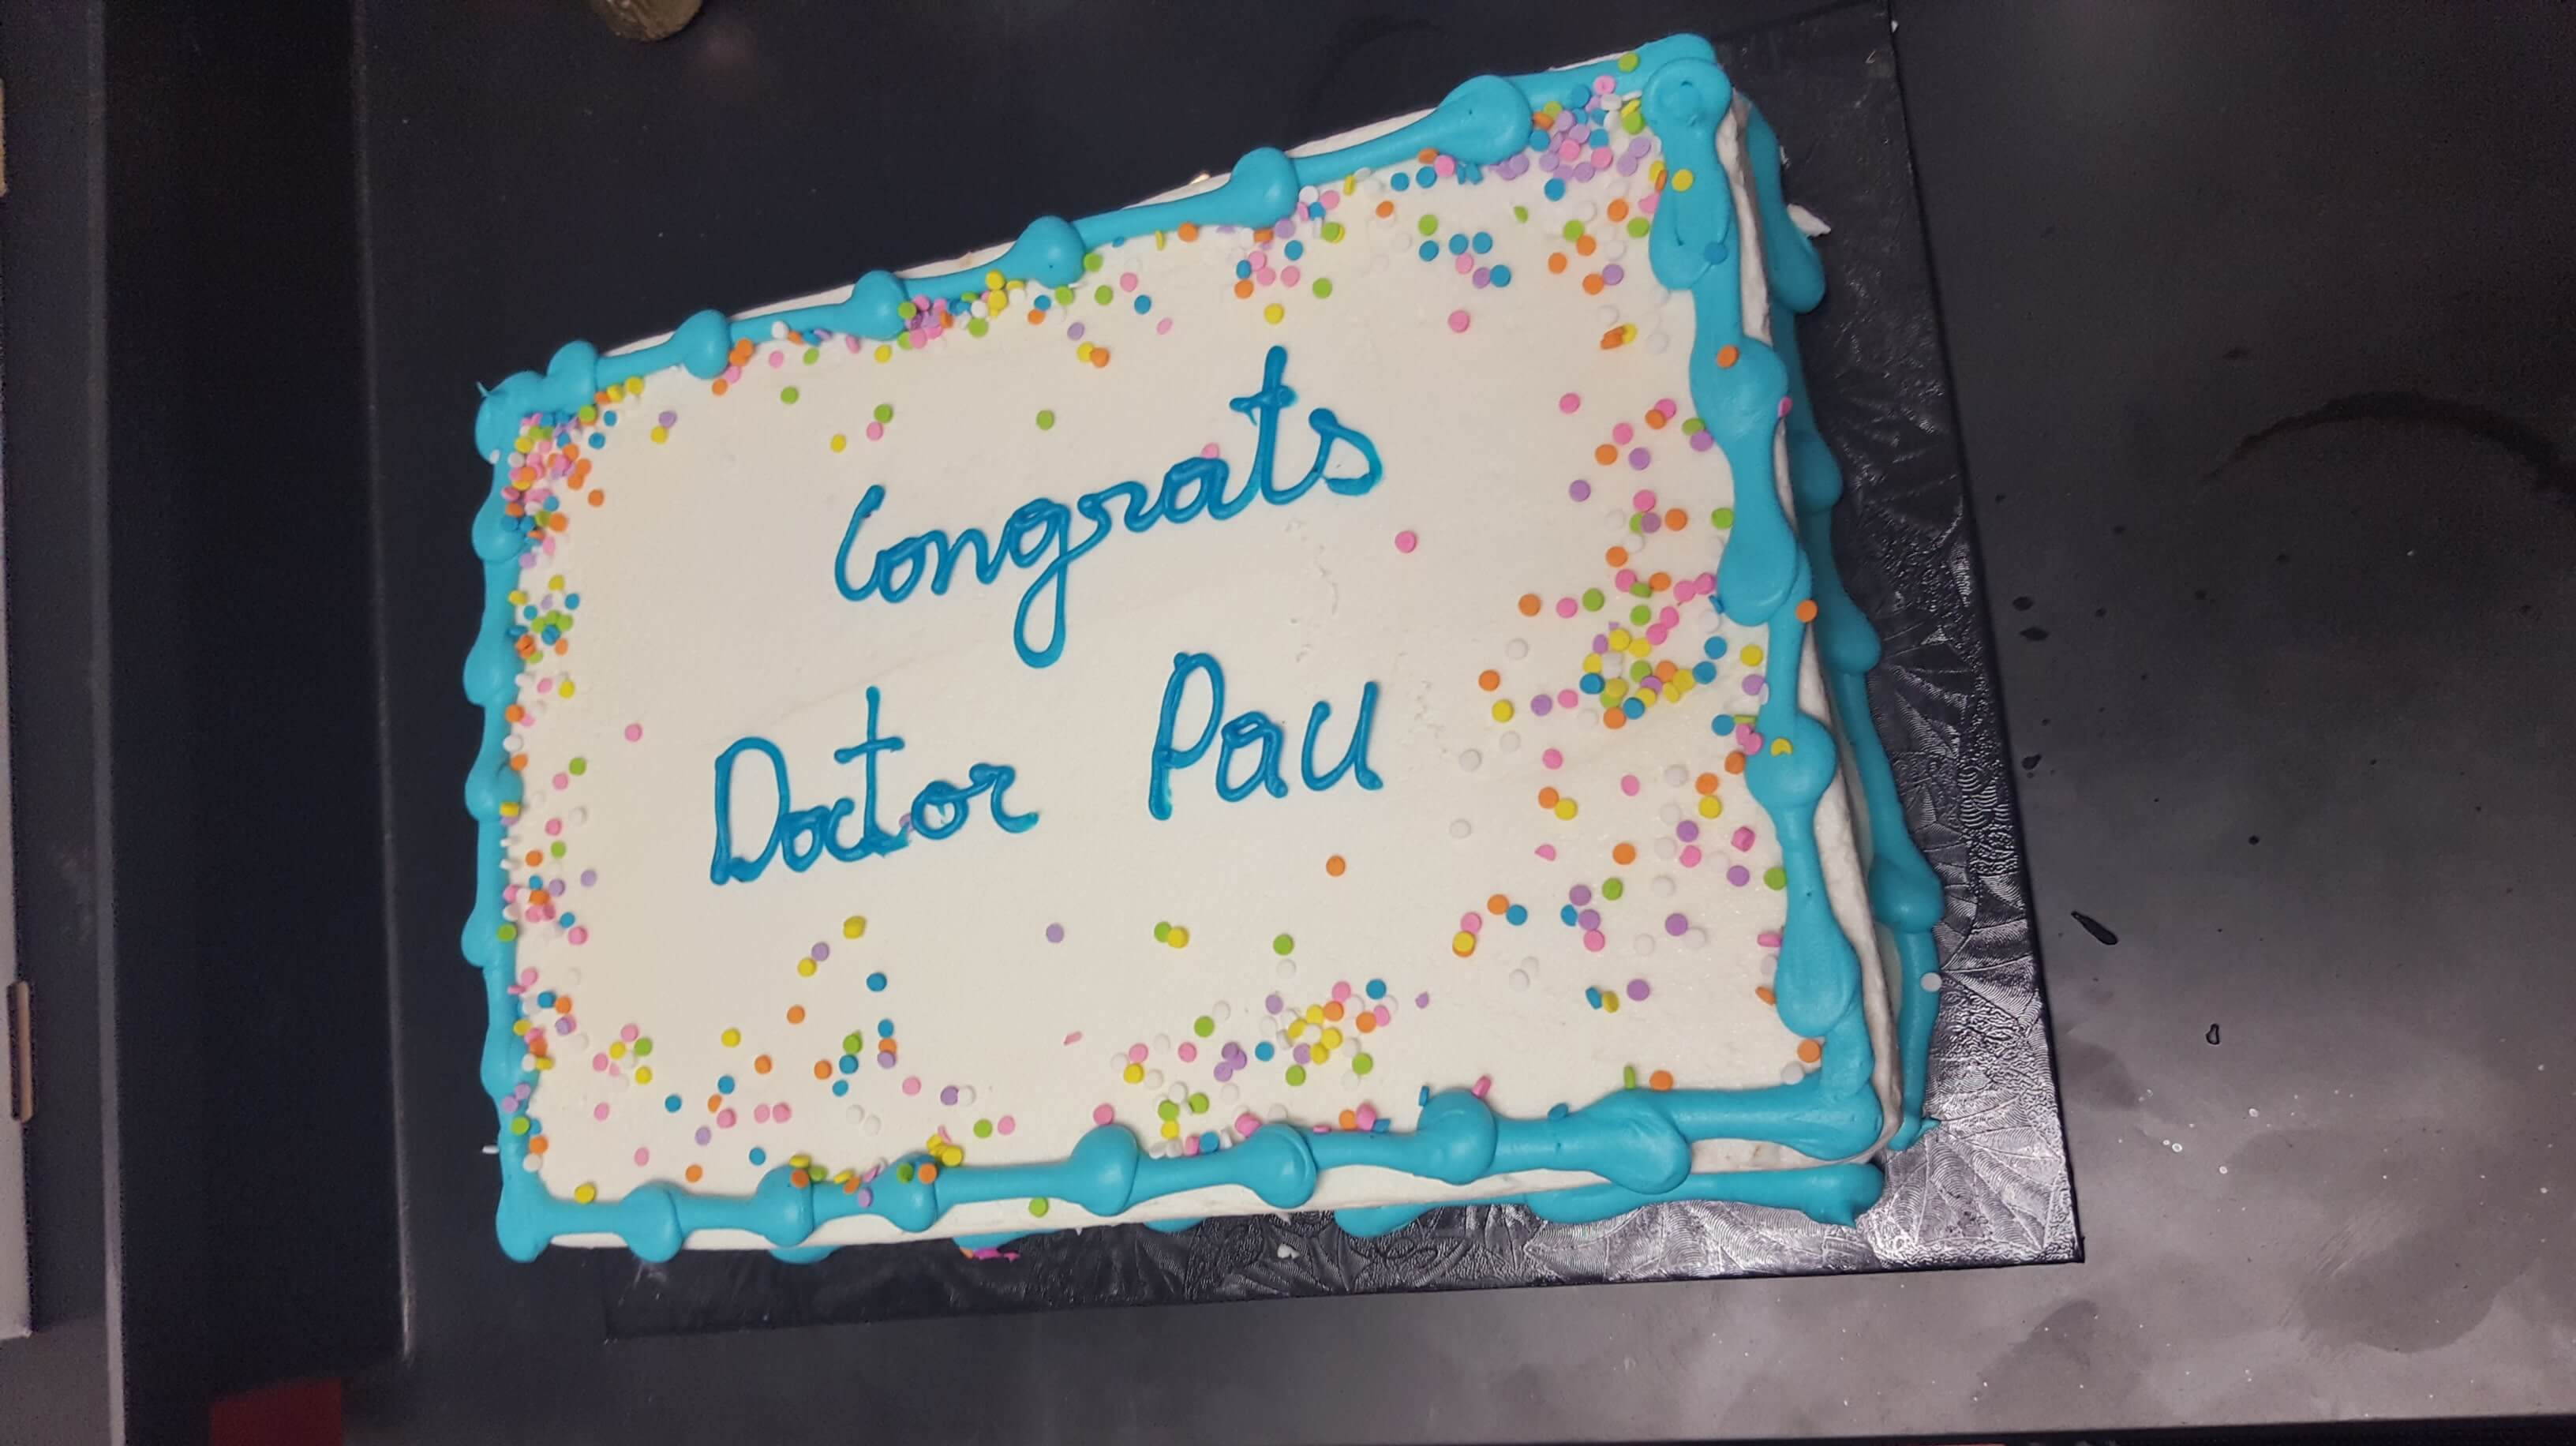 Jeff's PhD Cake